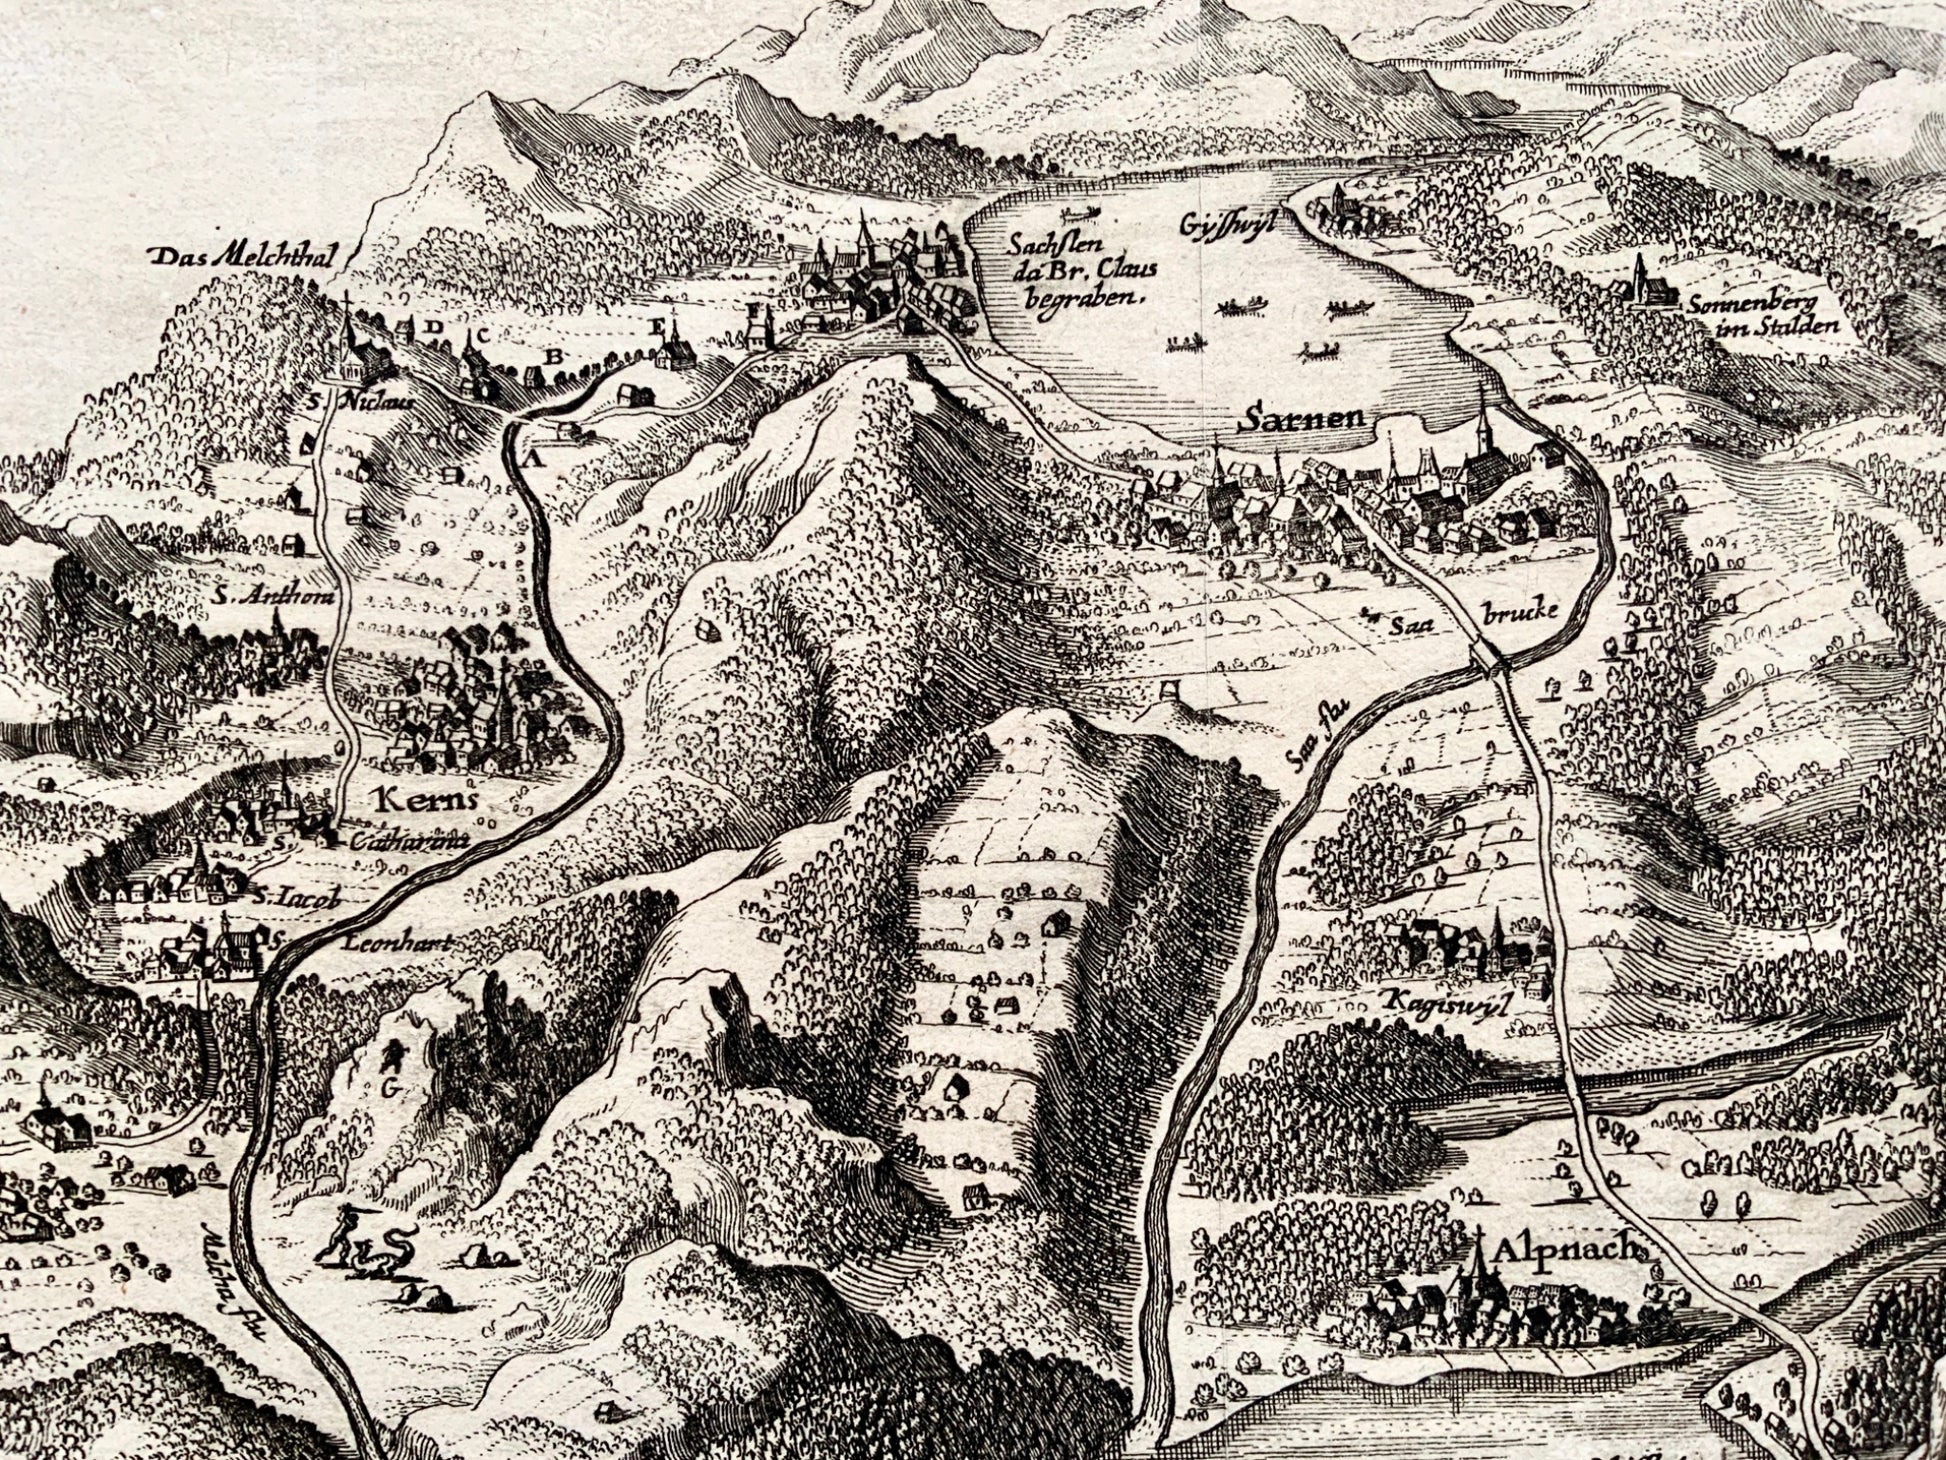 1720 Vans der Aa / Covens after Merian - Central Switzerland - Sarnen Stans - Map